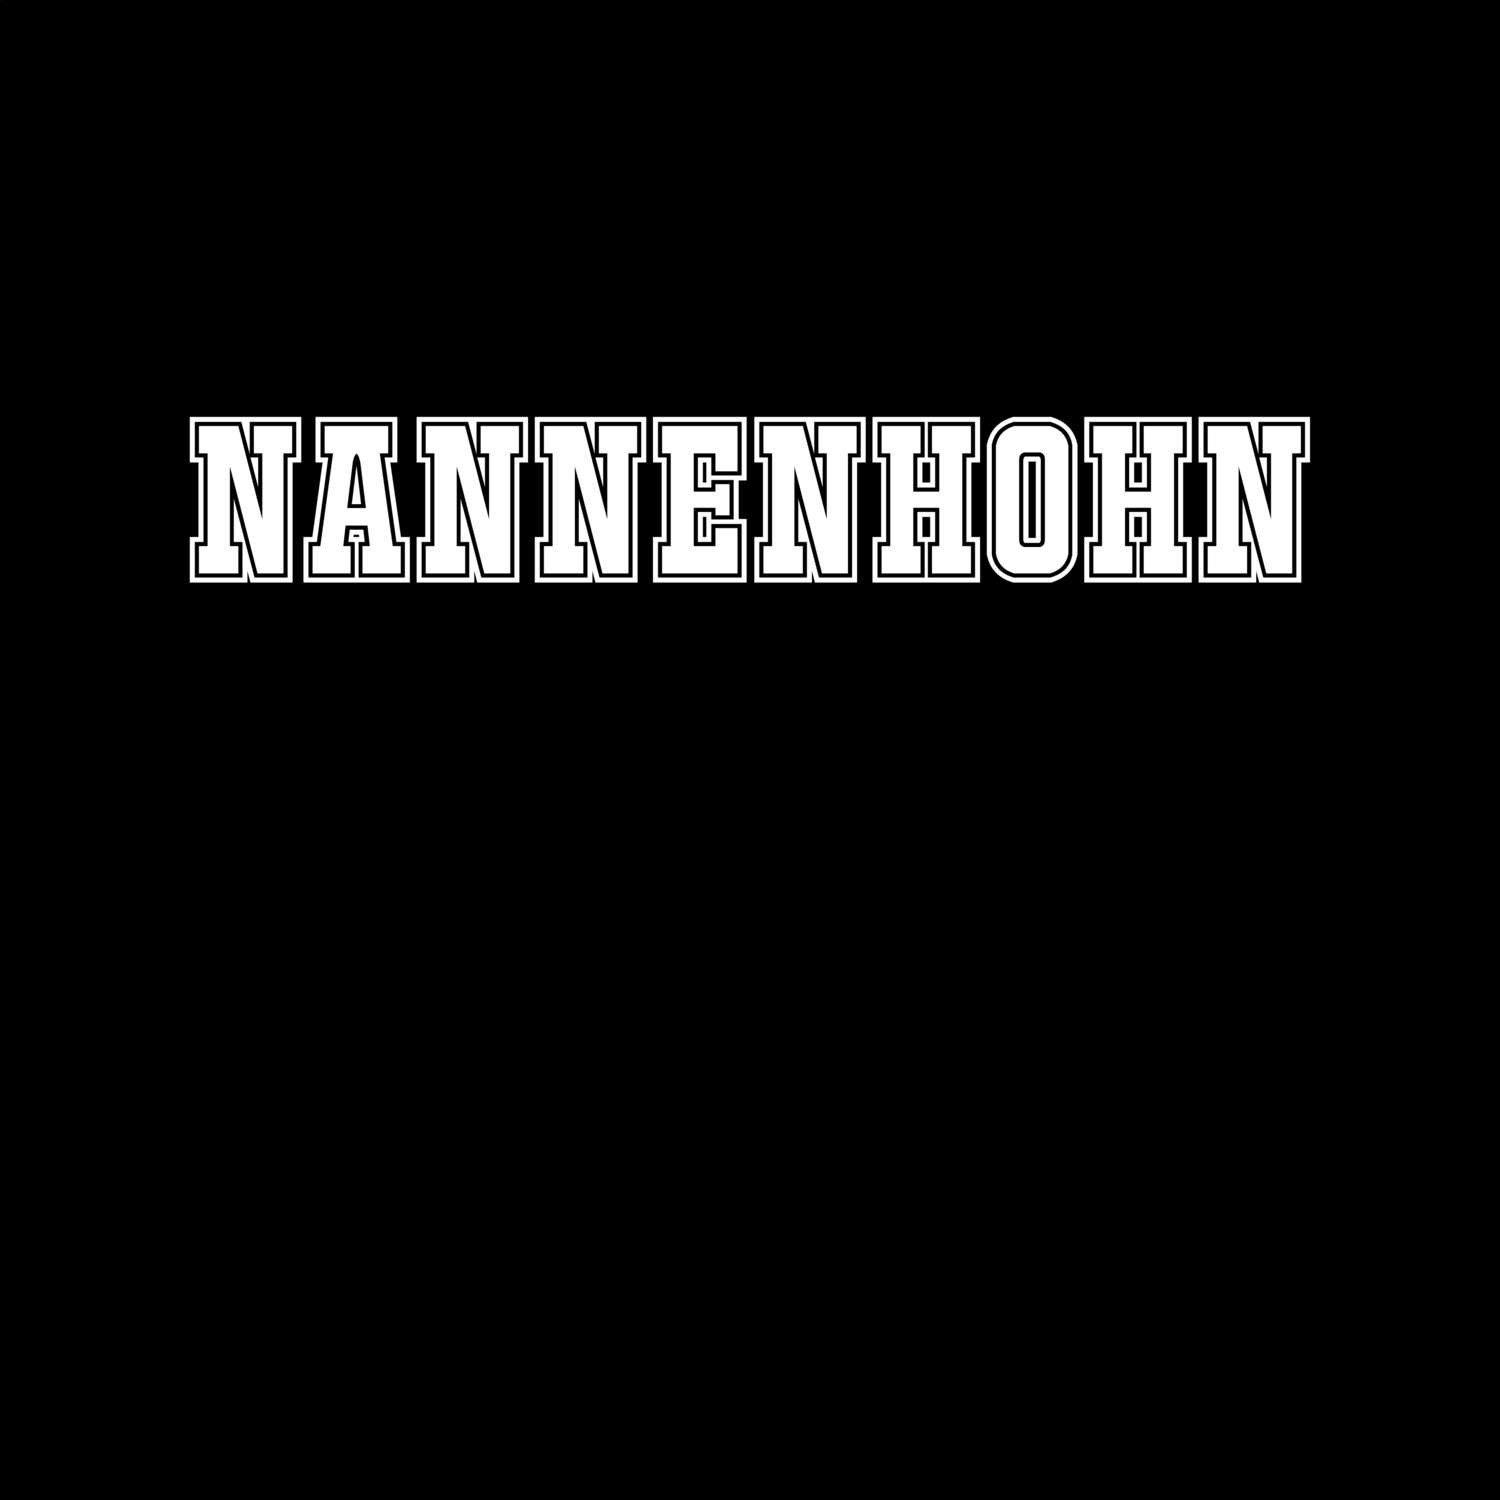 Nannenhohn T-Shirt »Classic«